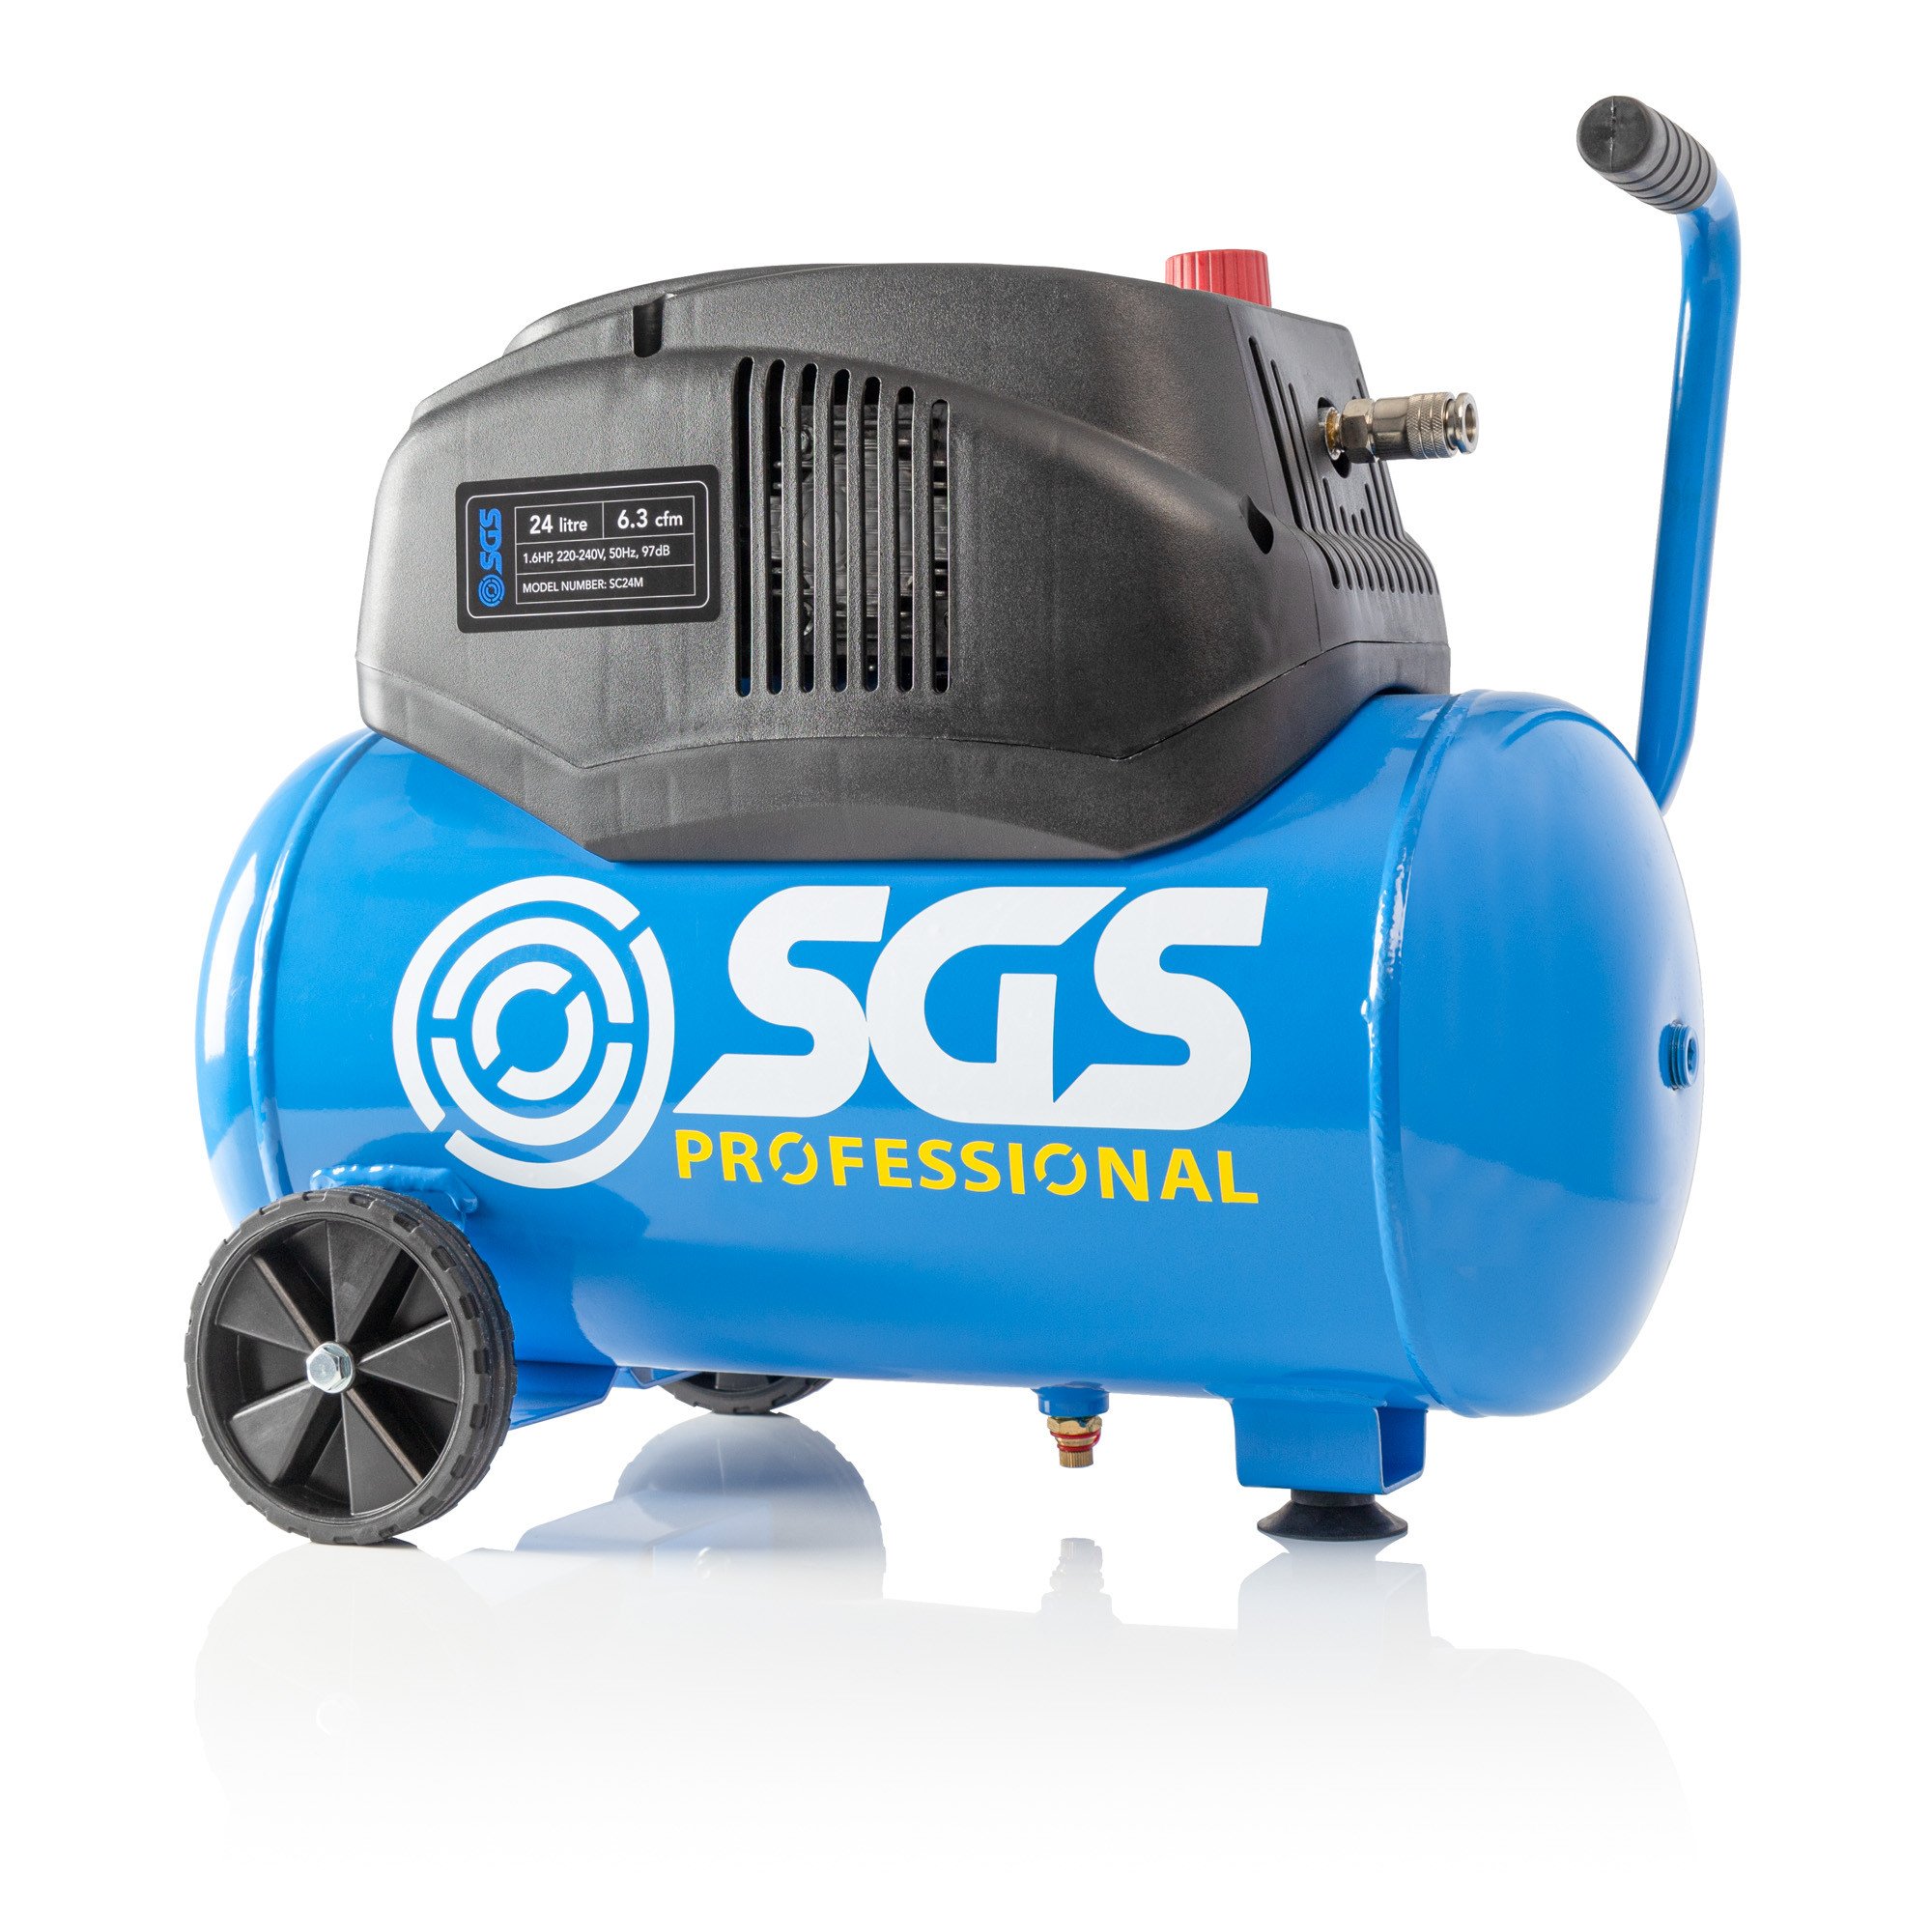 SGS 24升无油空气压缩机- 6.3 CFM, 1.6 HP